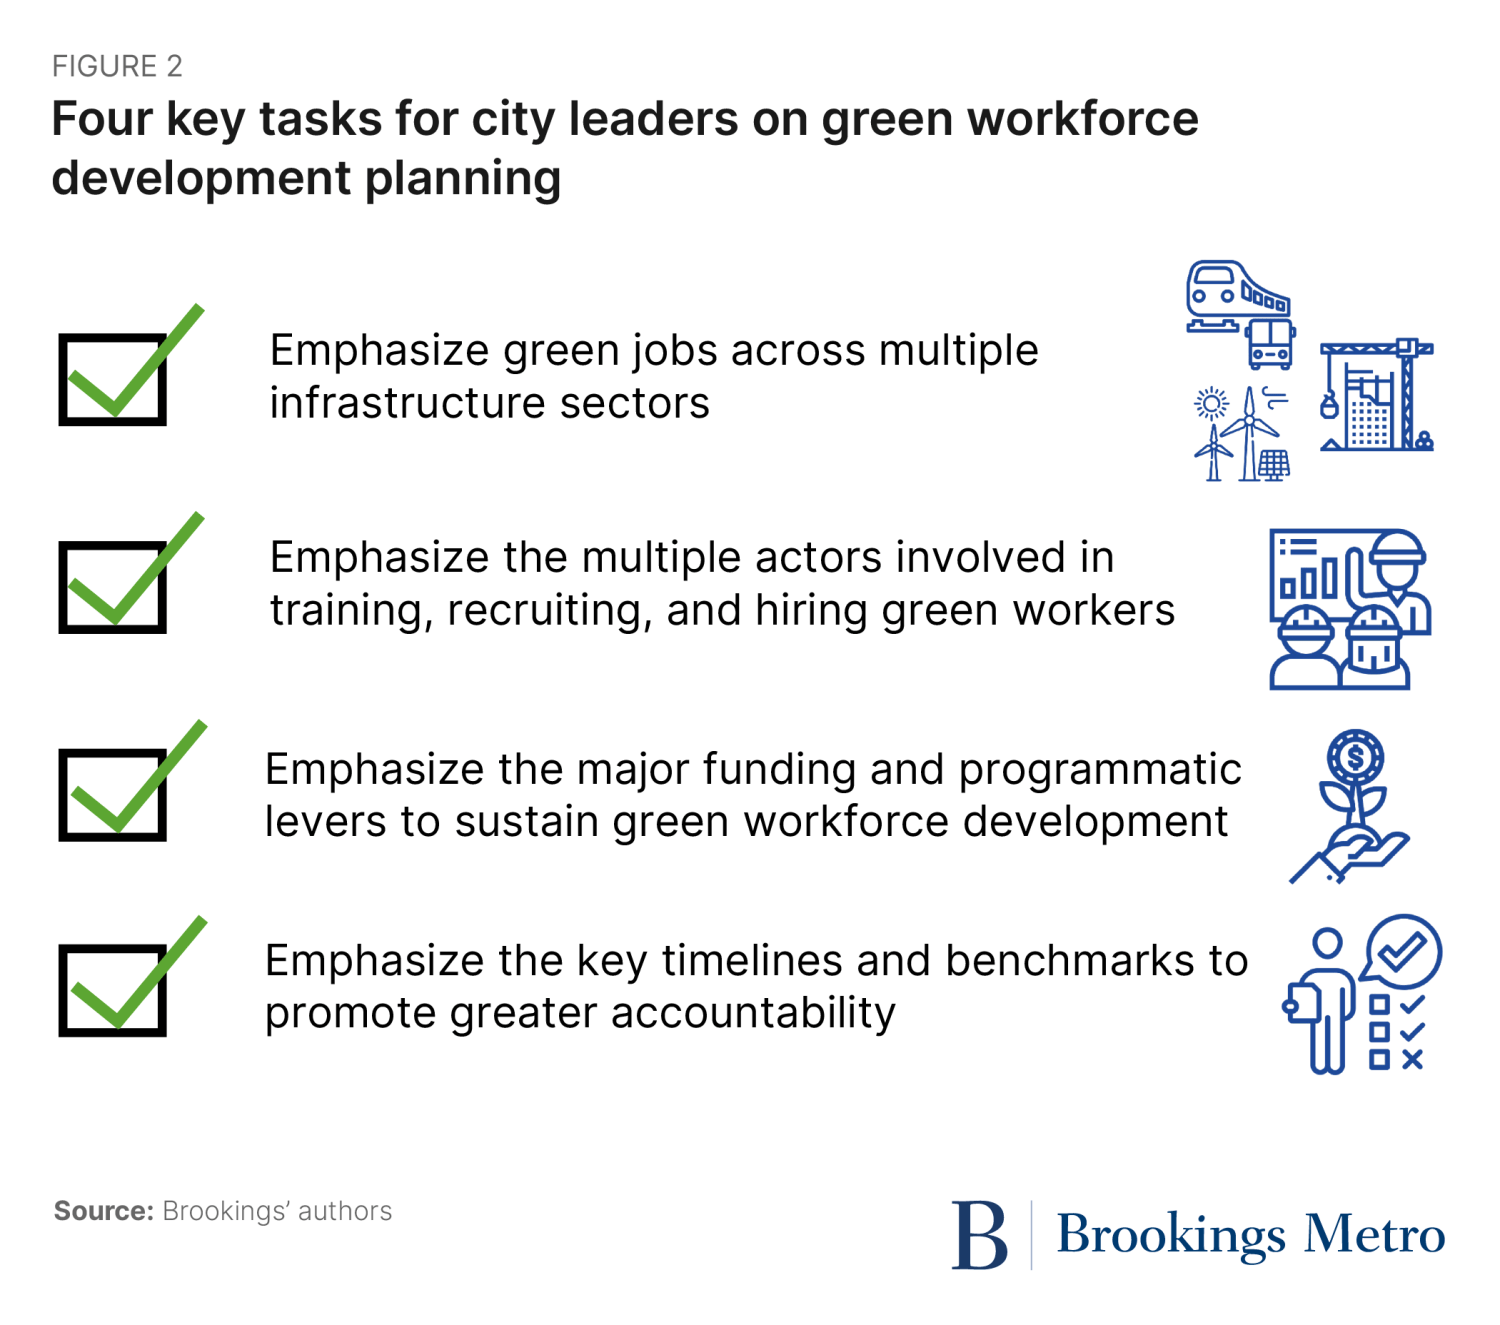 Figure 2: Four key tasks for city leaders on green workforce development planning